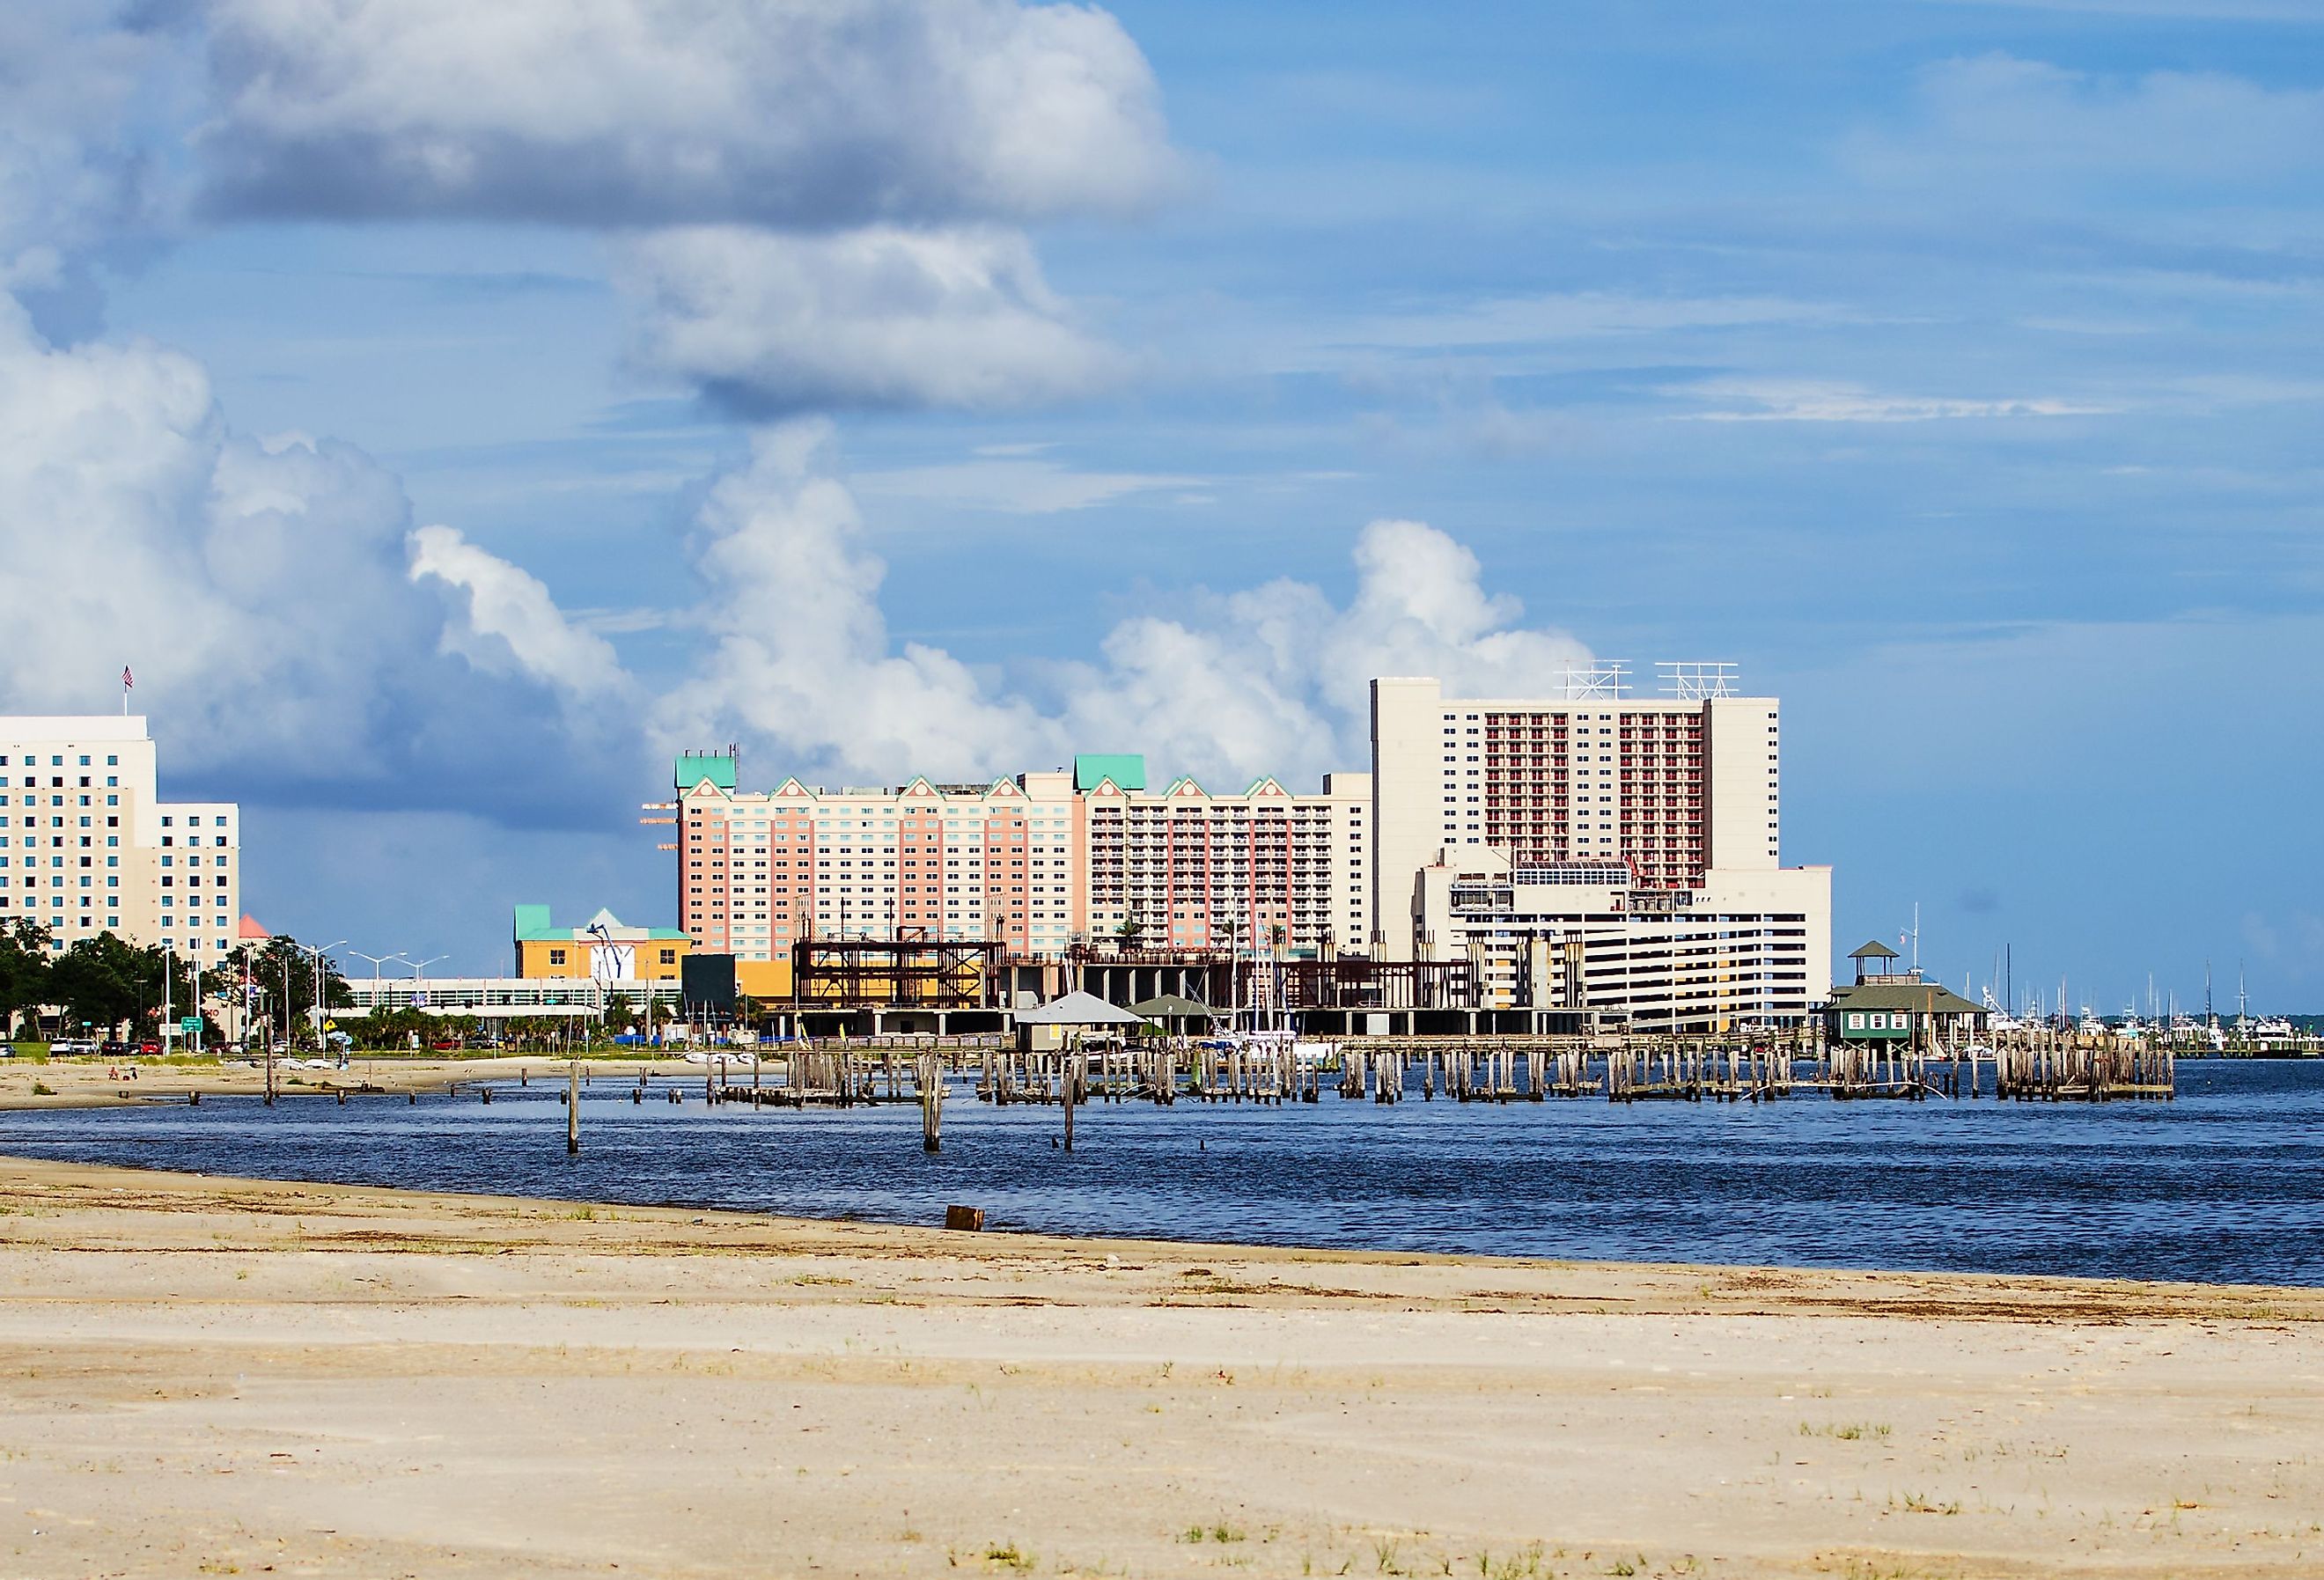 Biloxi, Mississippi, casinos and buildings along Gulf Coast shore.